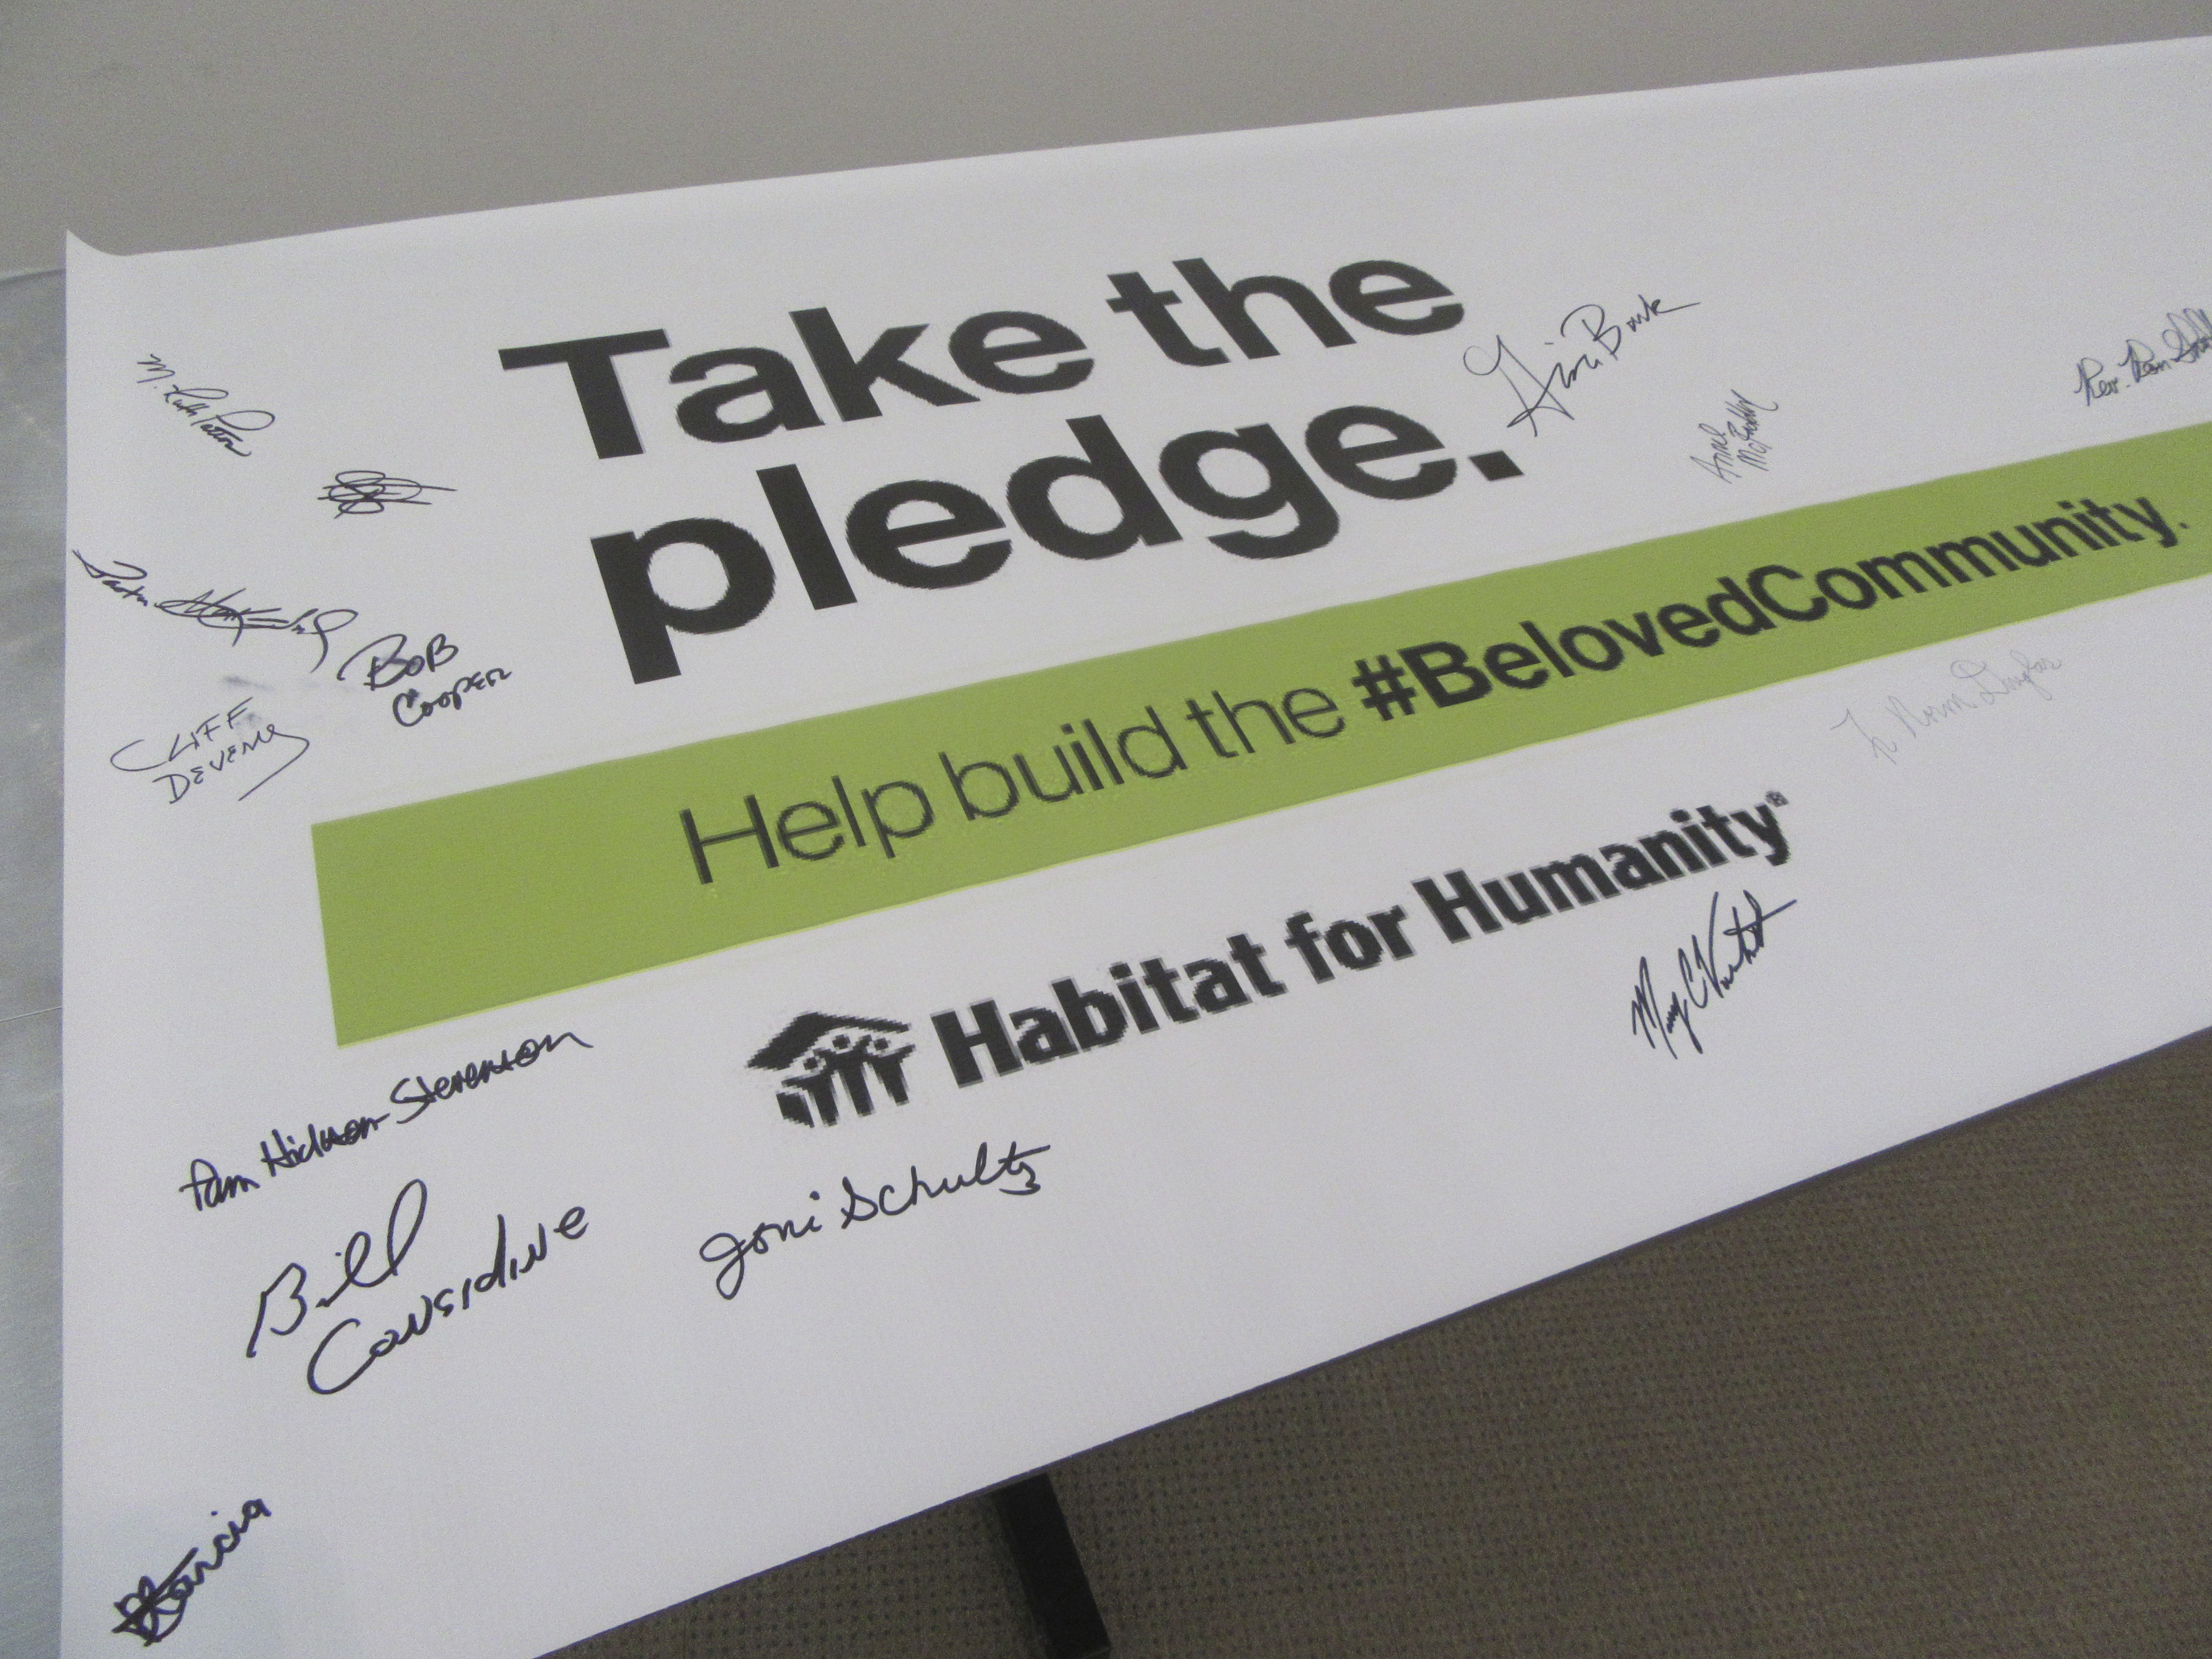 Habitat joins nationwide “Beloved Community” initiative